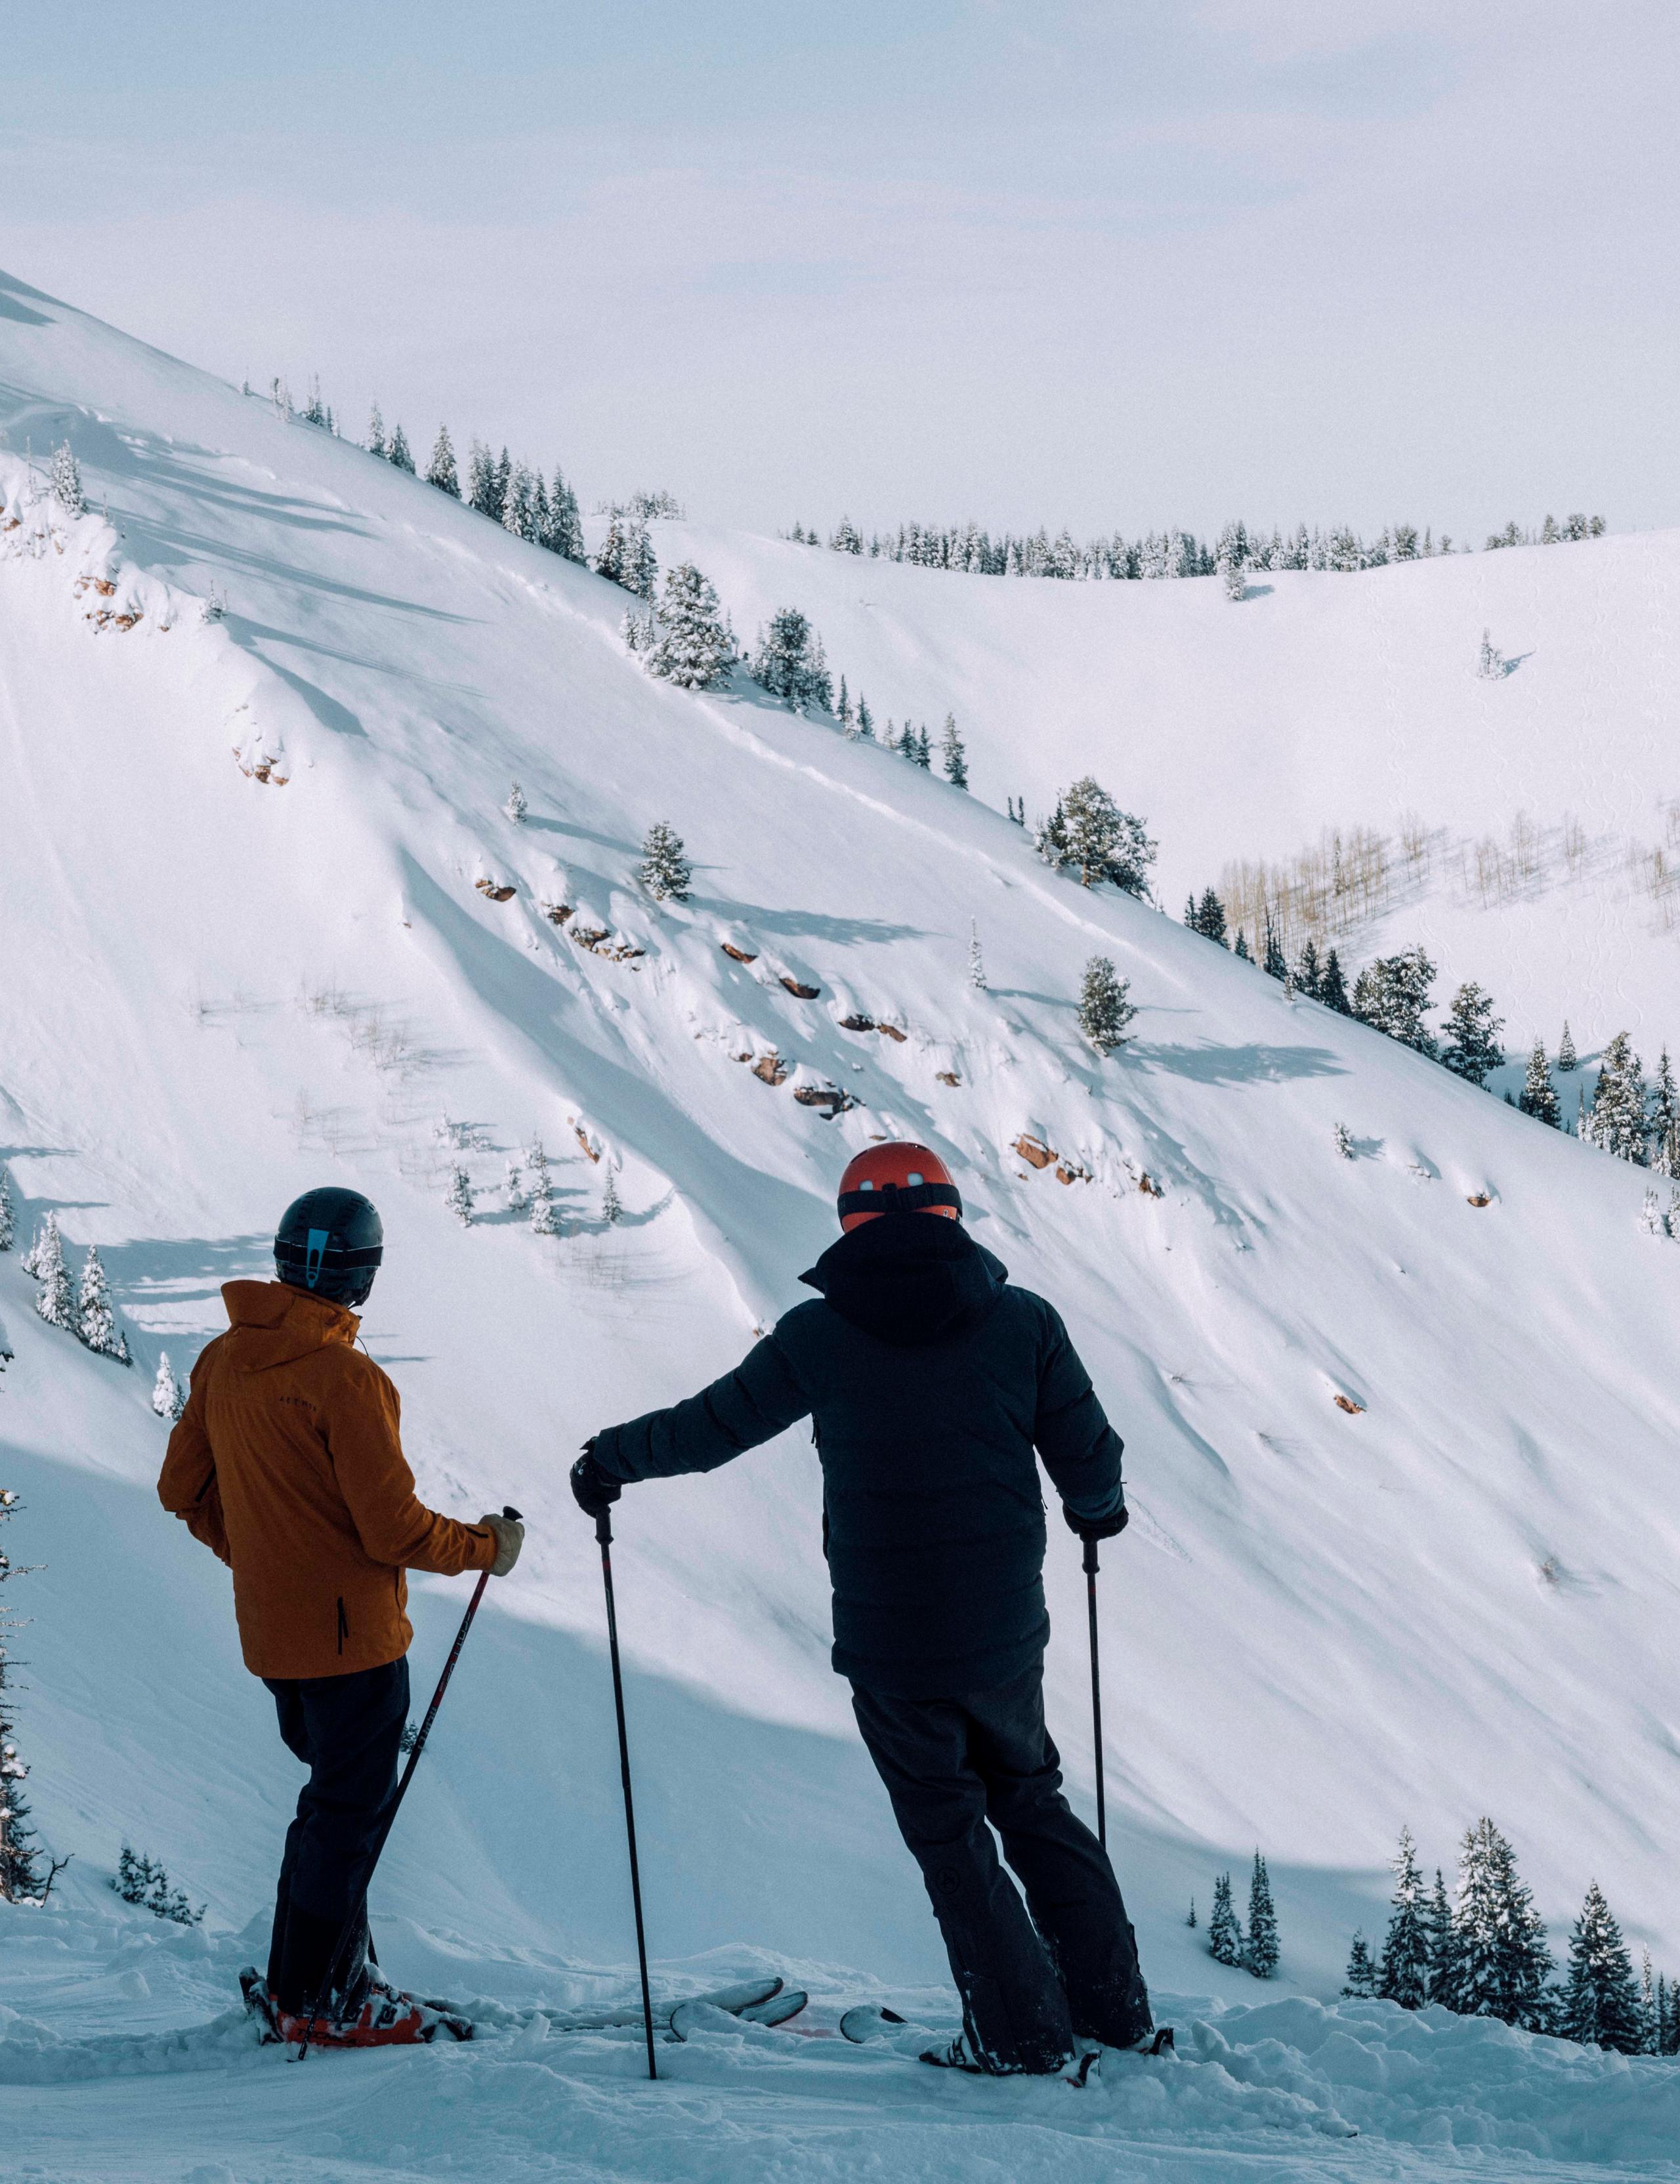 Two men in ski outfit on snow mountain.